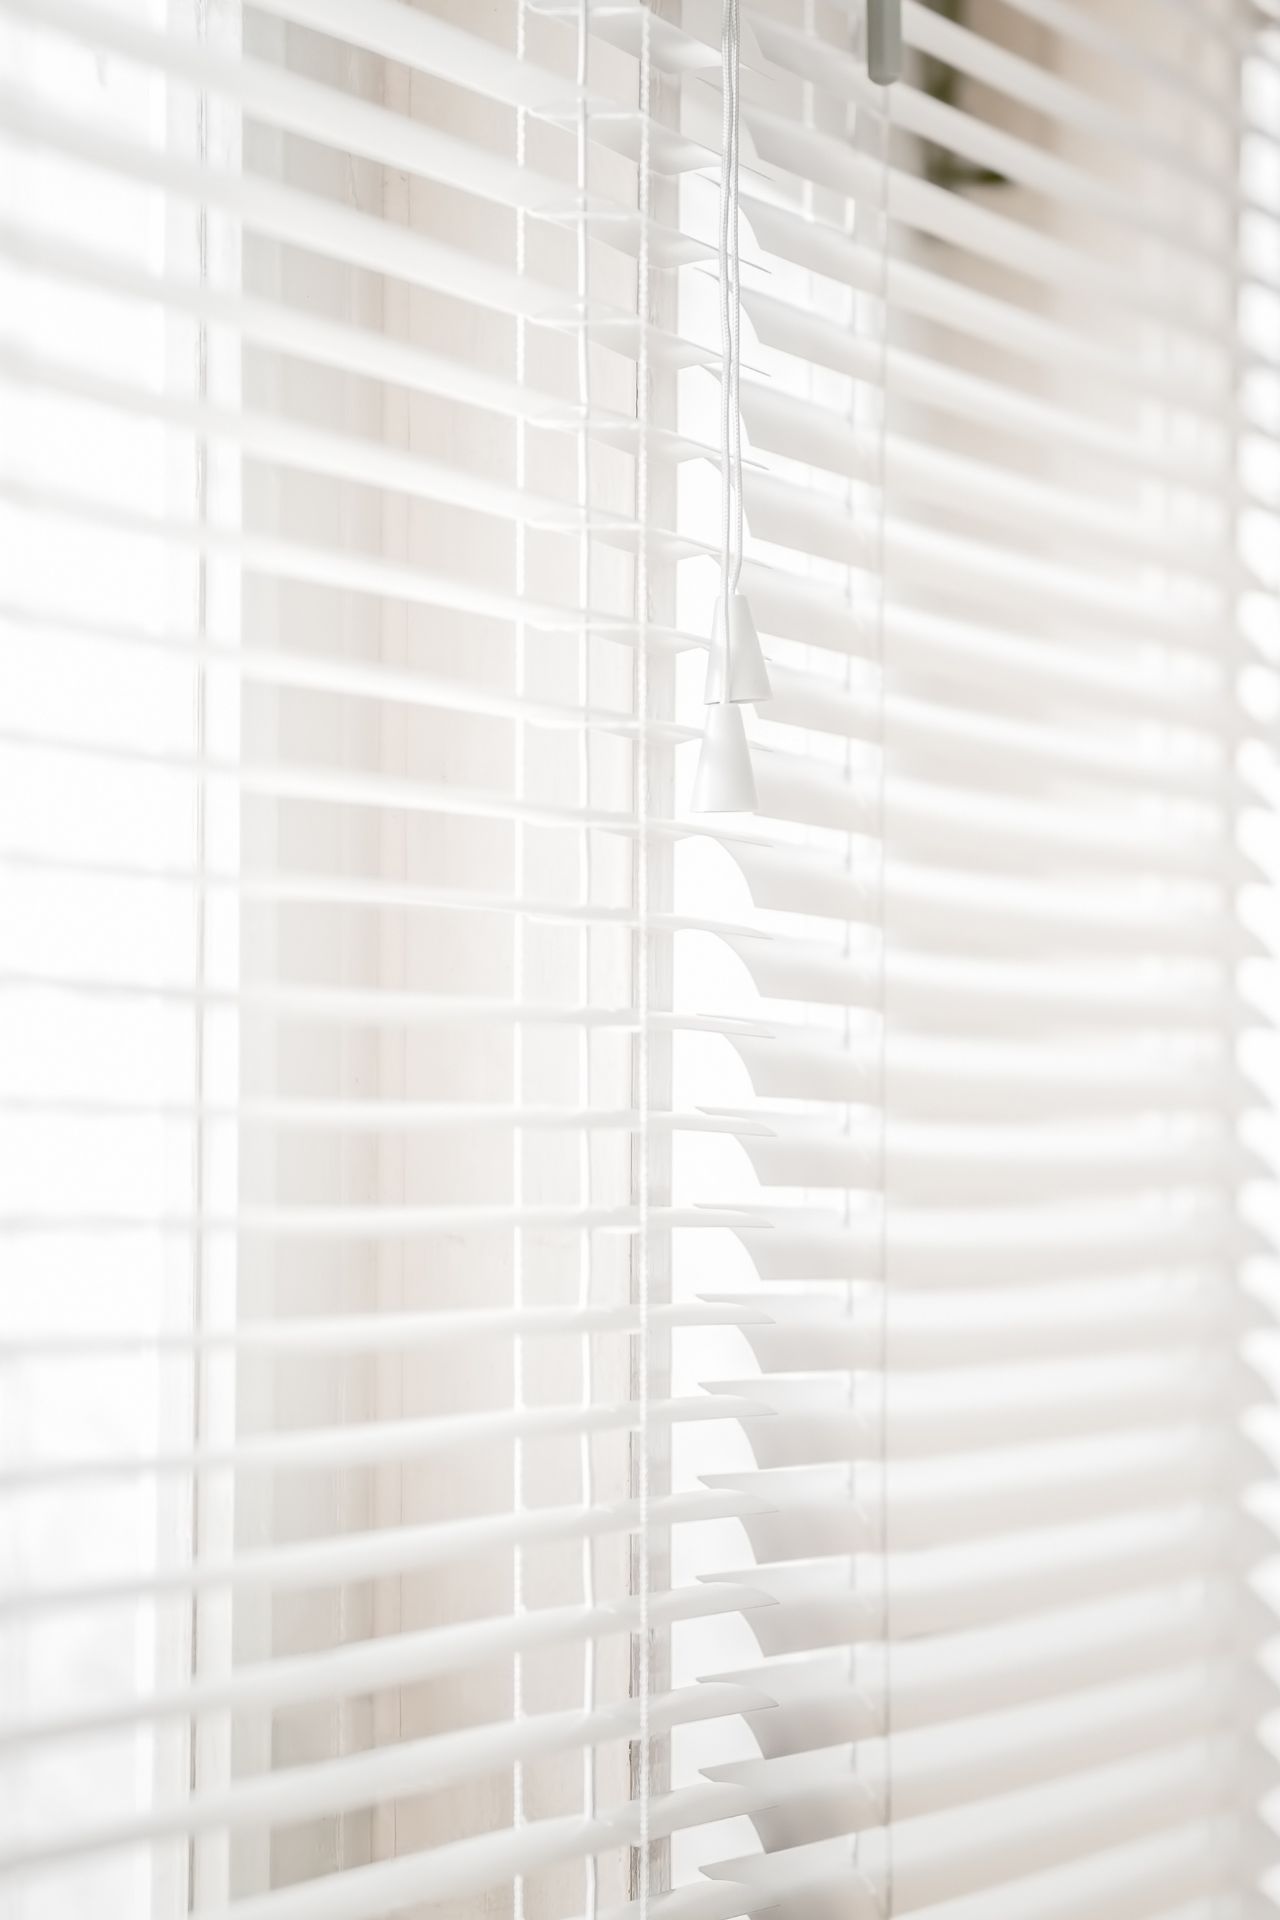 shutter blinds in dubai